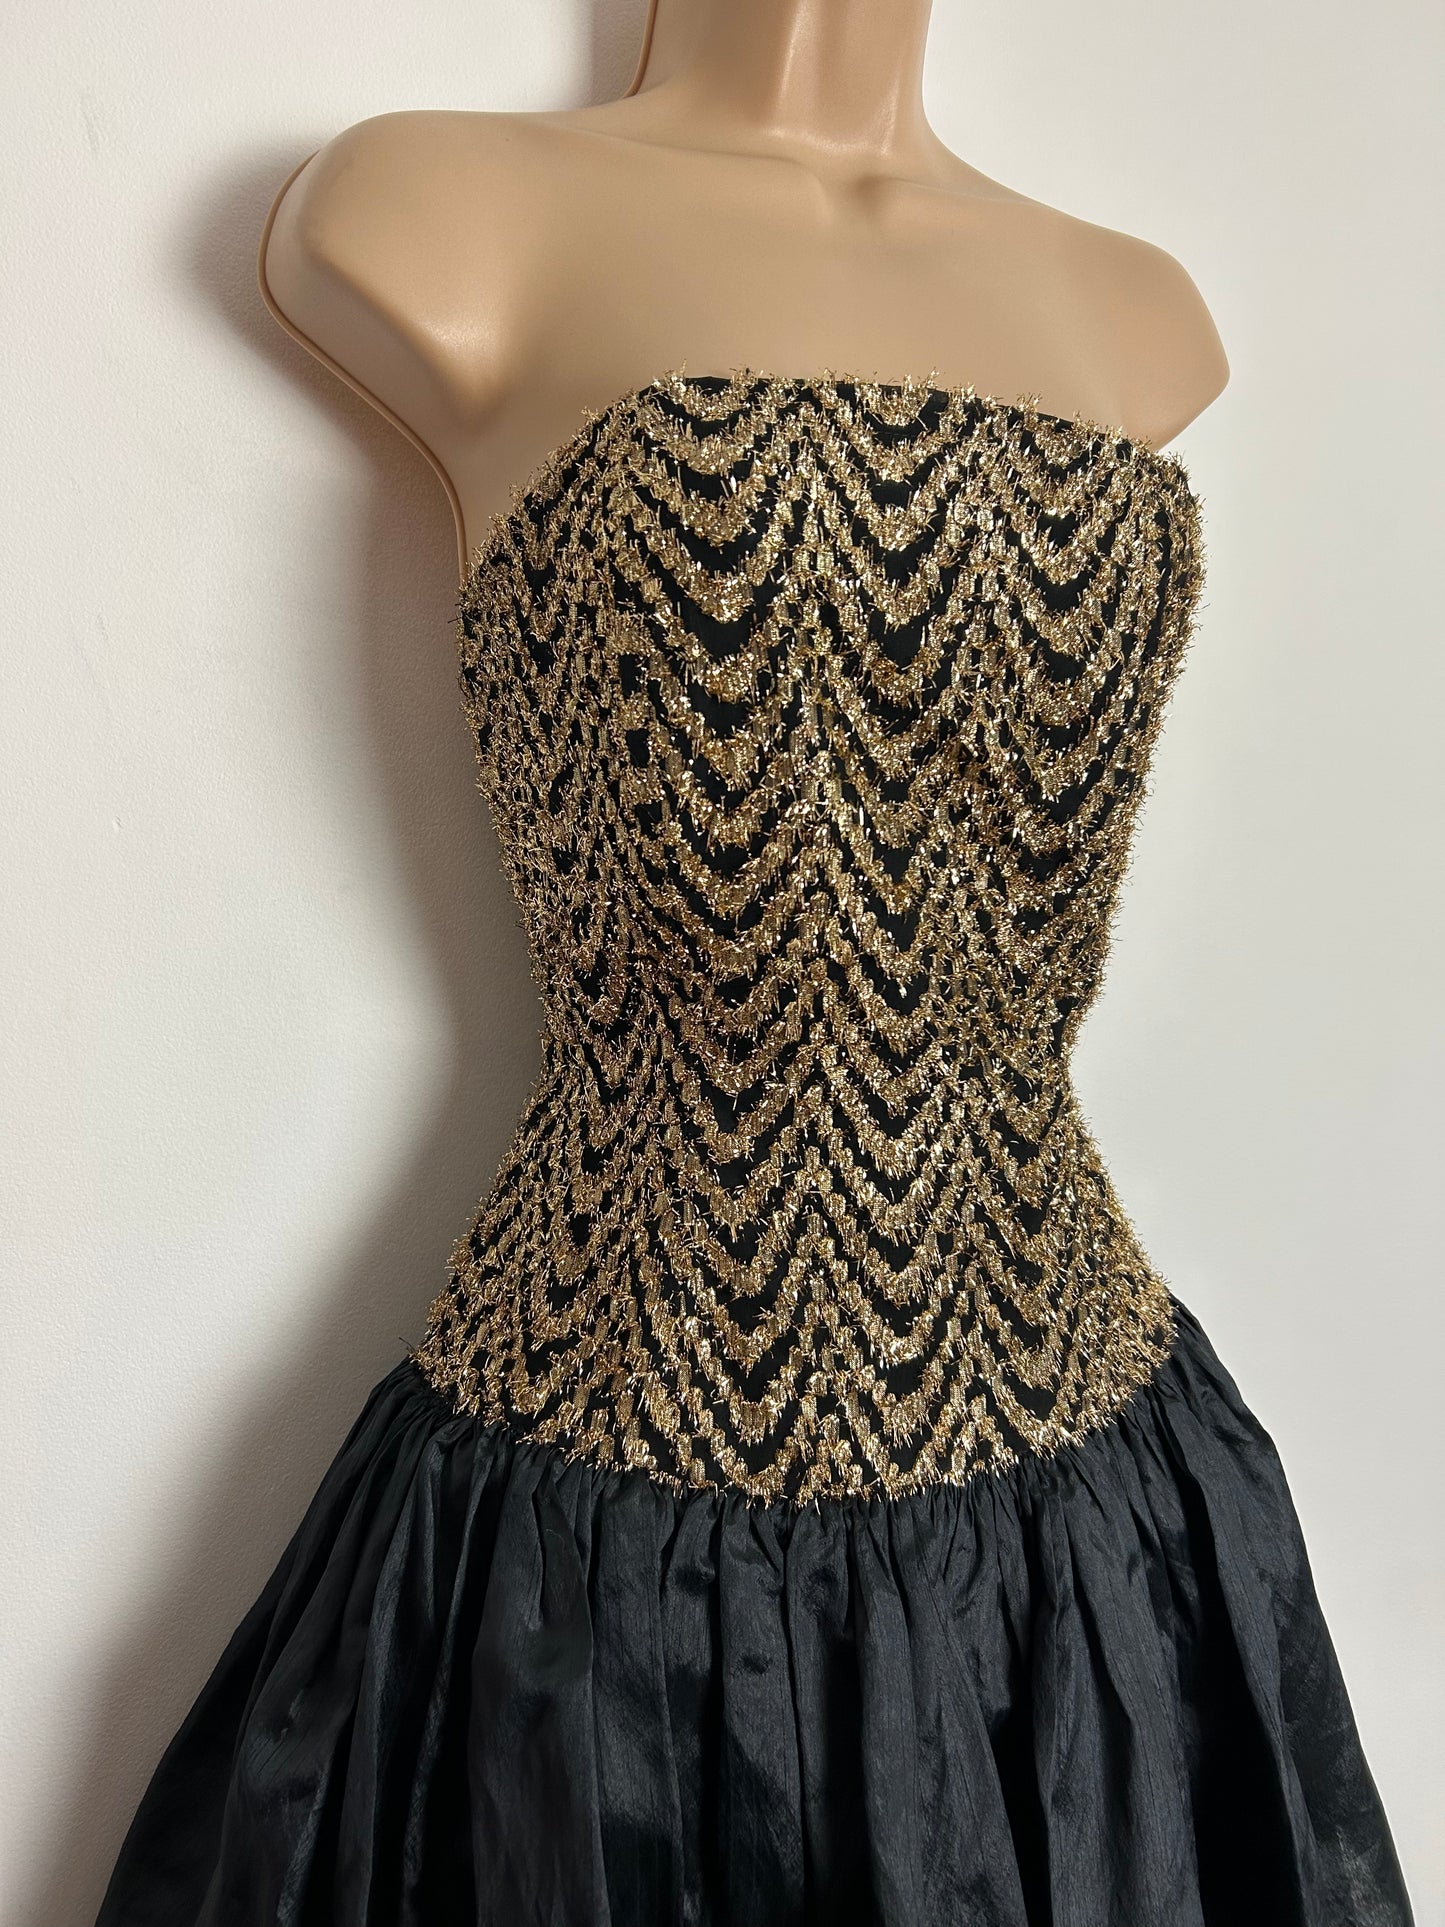 Vintage 1980s Size 6 STUNNING Black & Gold Eyelash Frill Strapless Boned Layered Full Length Ballgown